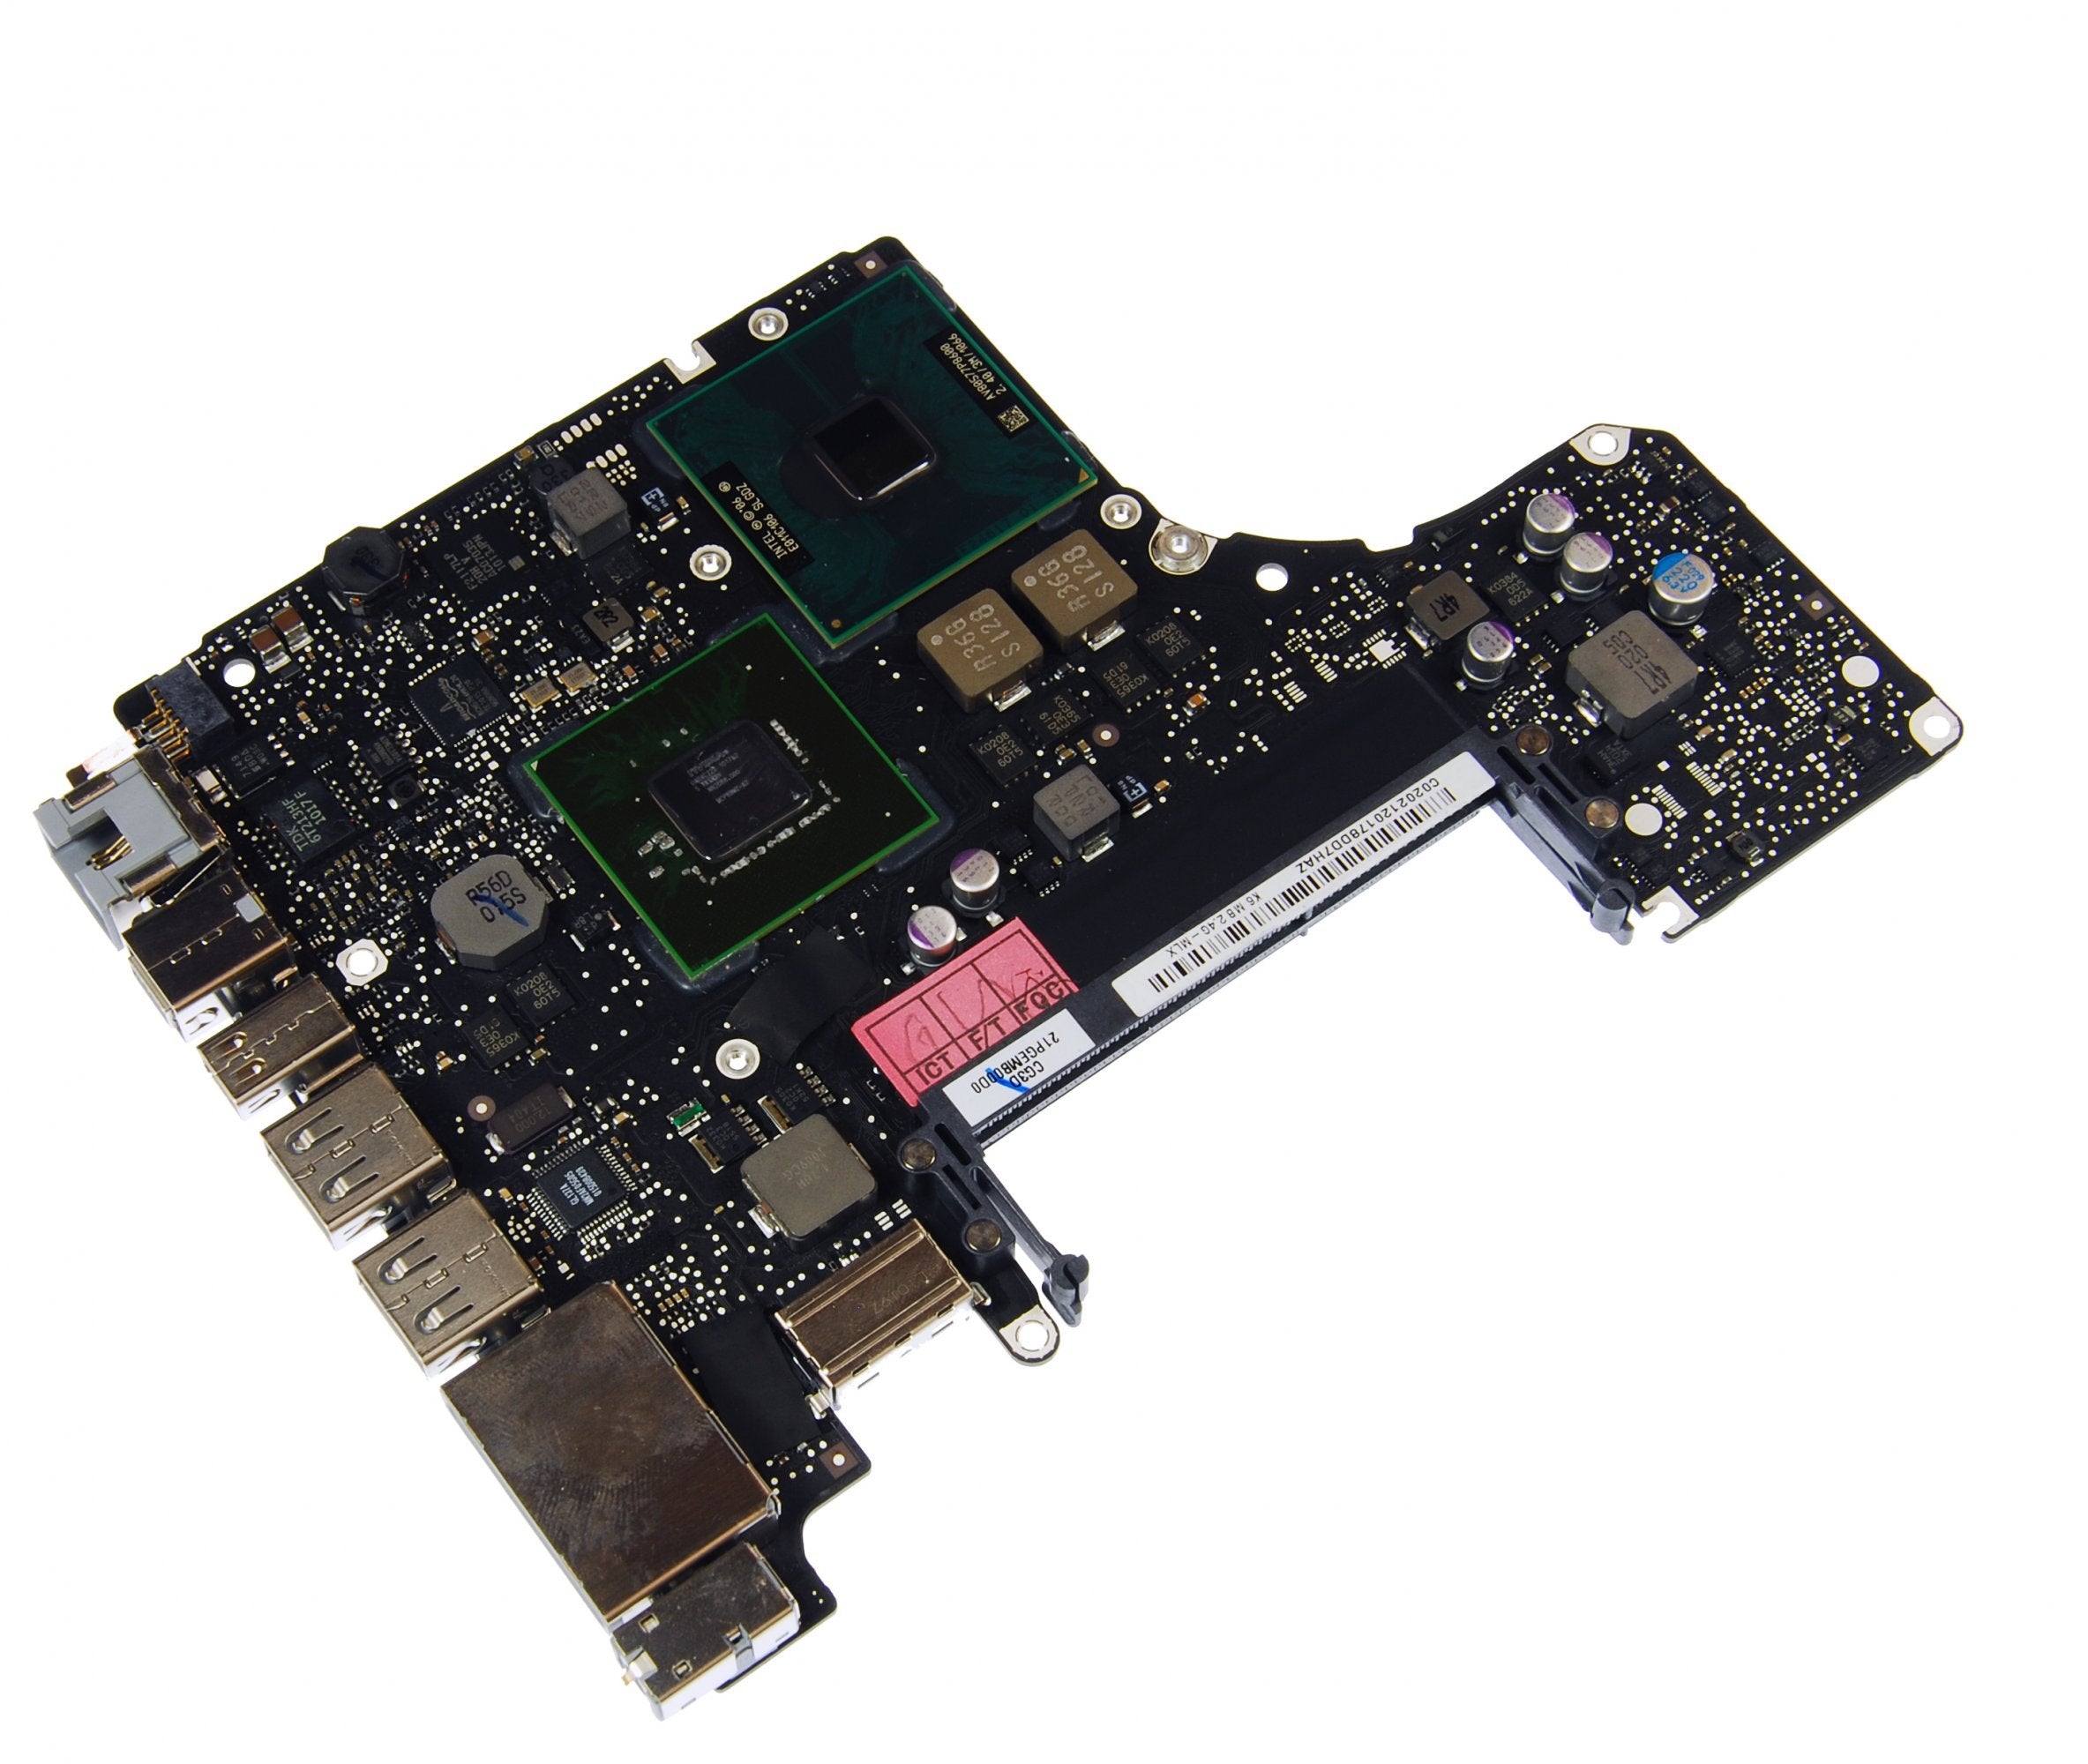 MacBook Pro 13" Unibody (Mid 2010) 2.4 GHz Logic Board